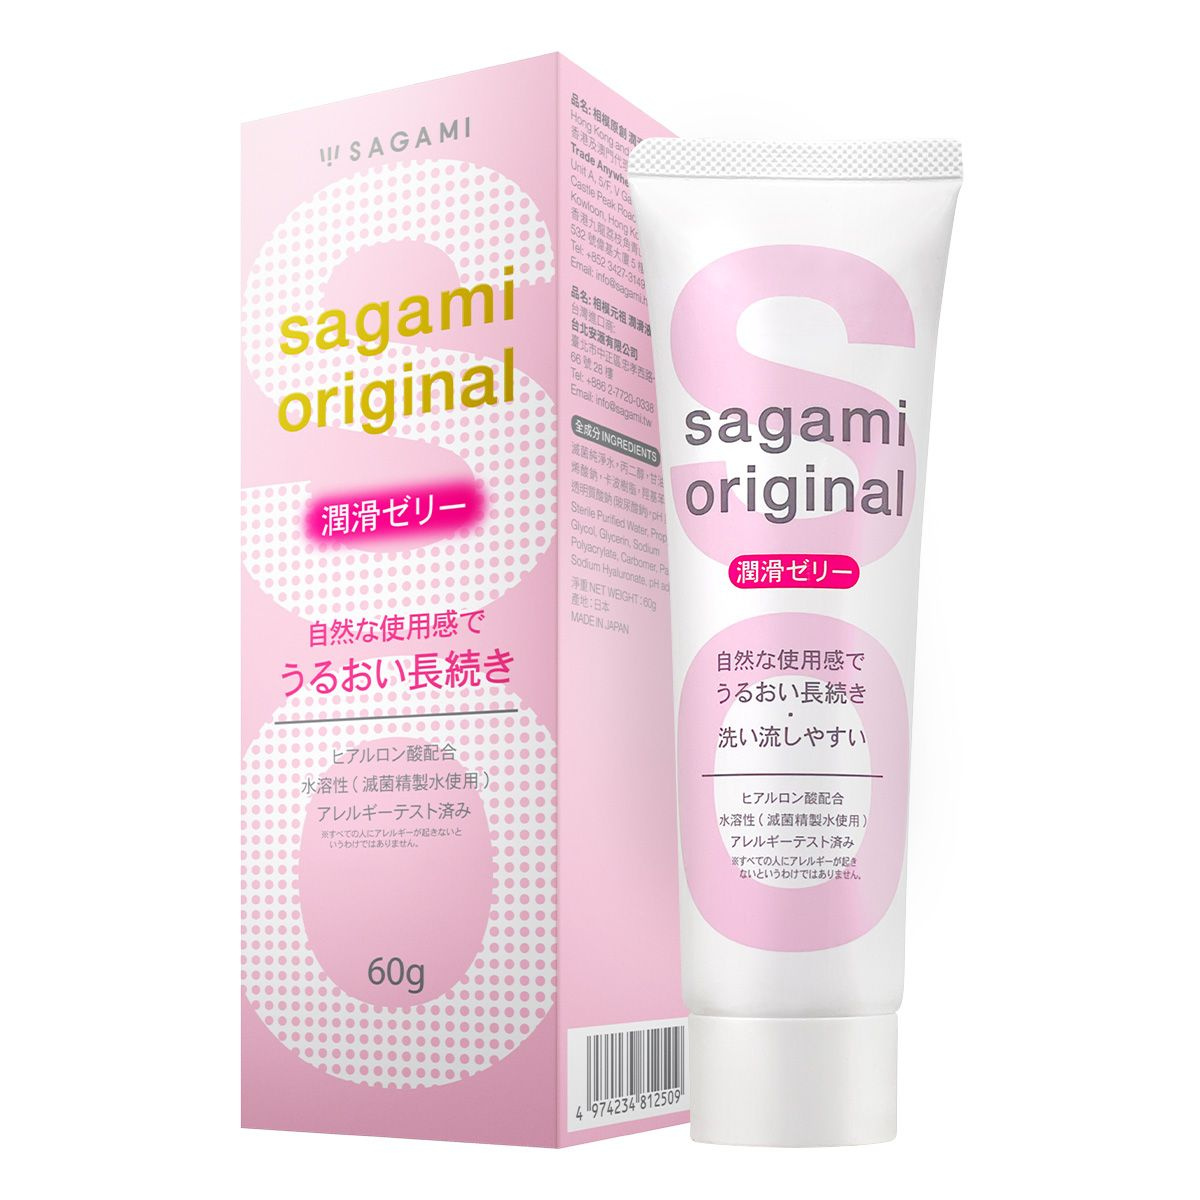 Sagami Original Gel 60g.